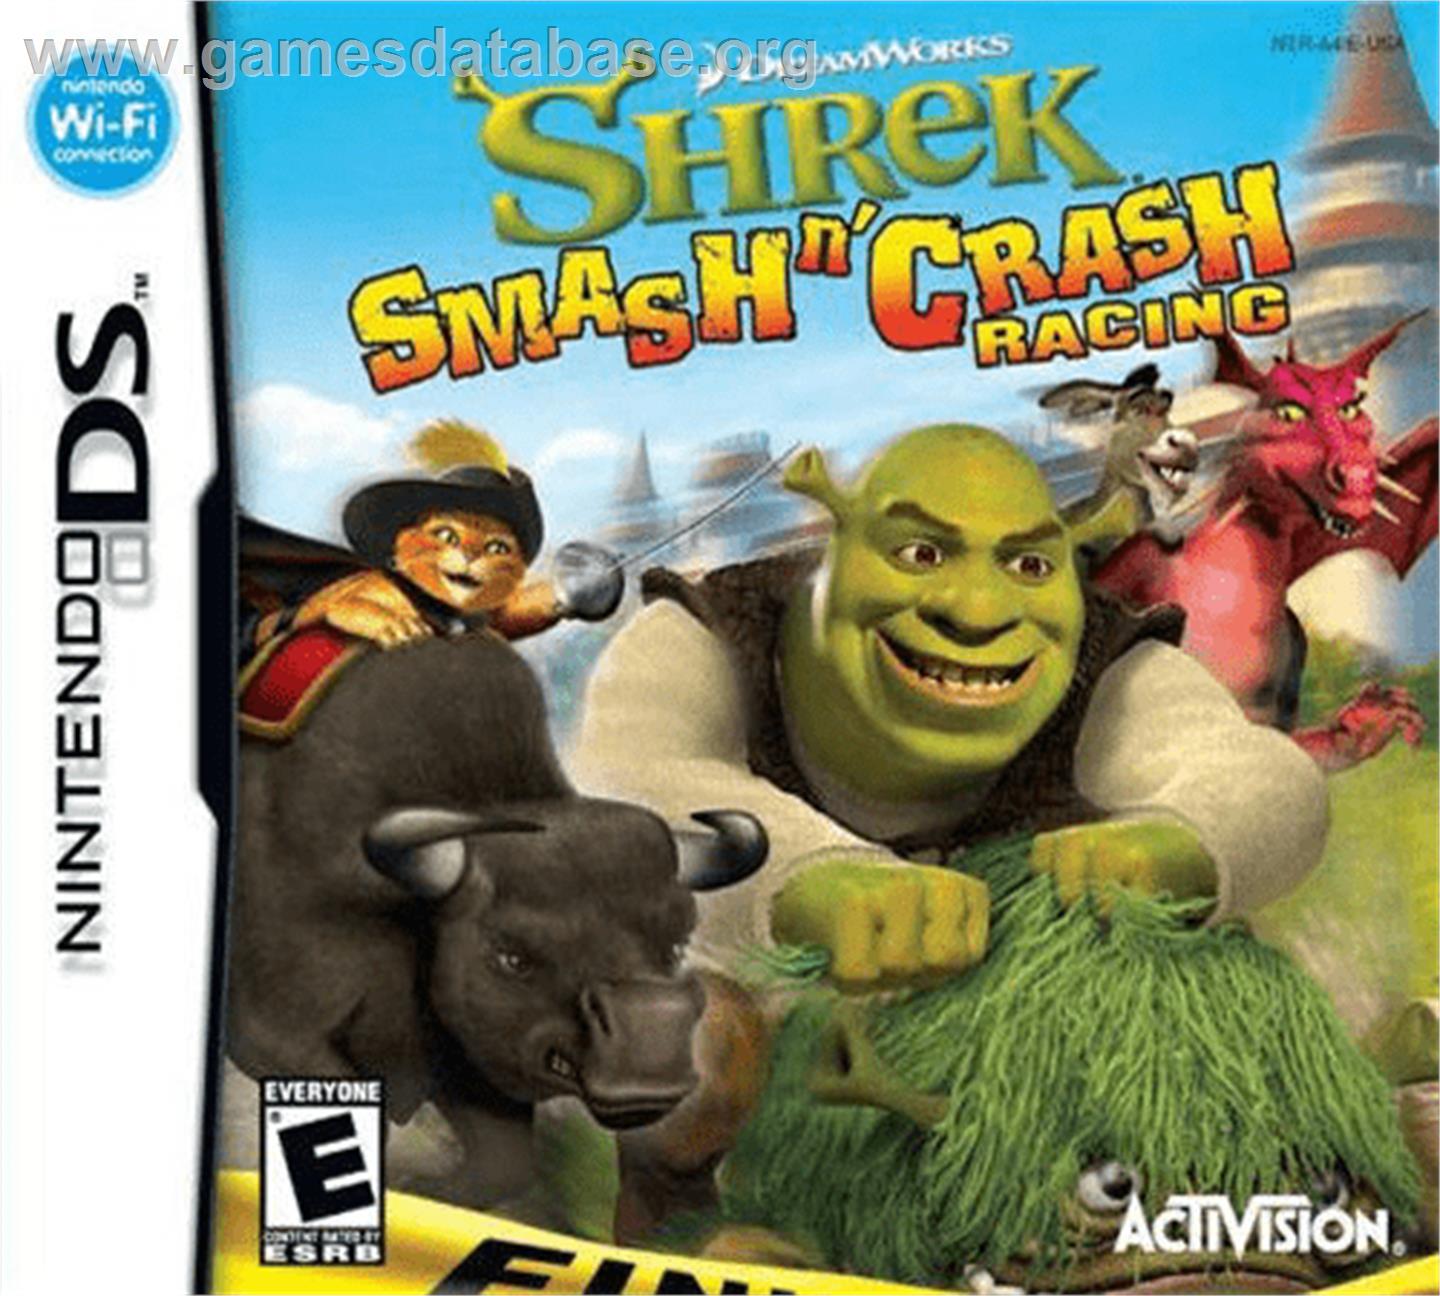 Shrek Smash N' Crash Racing - Nintendo DS - Artwork - Box